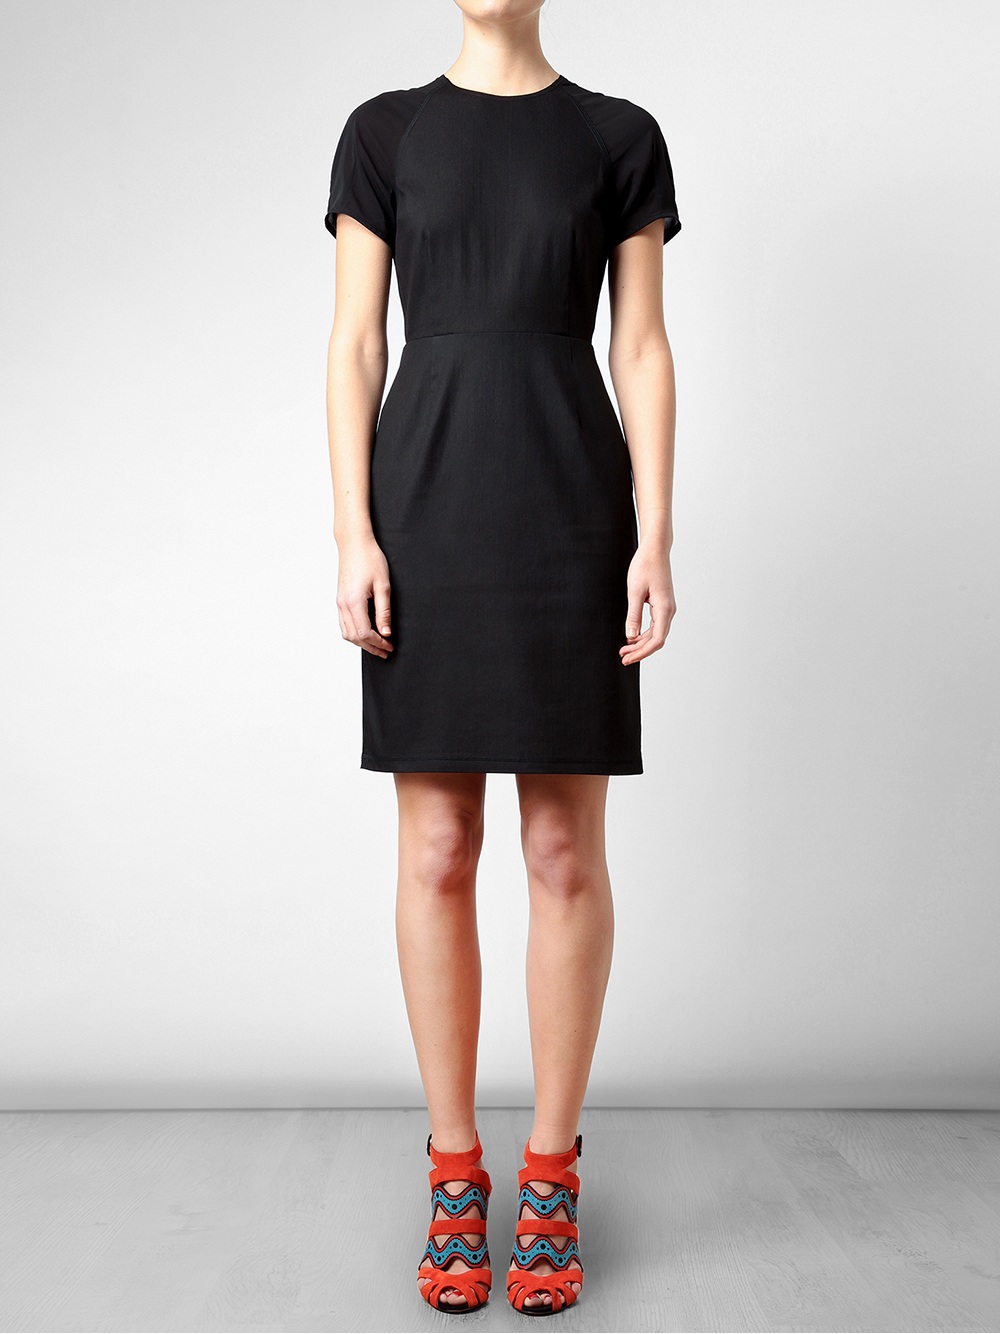 Acne Studios Lucille Denim and Chiffon Dress in Black | Lyst